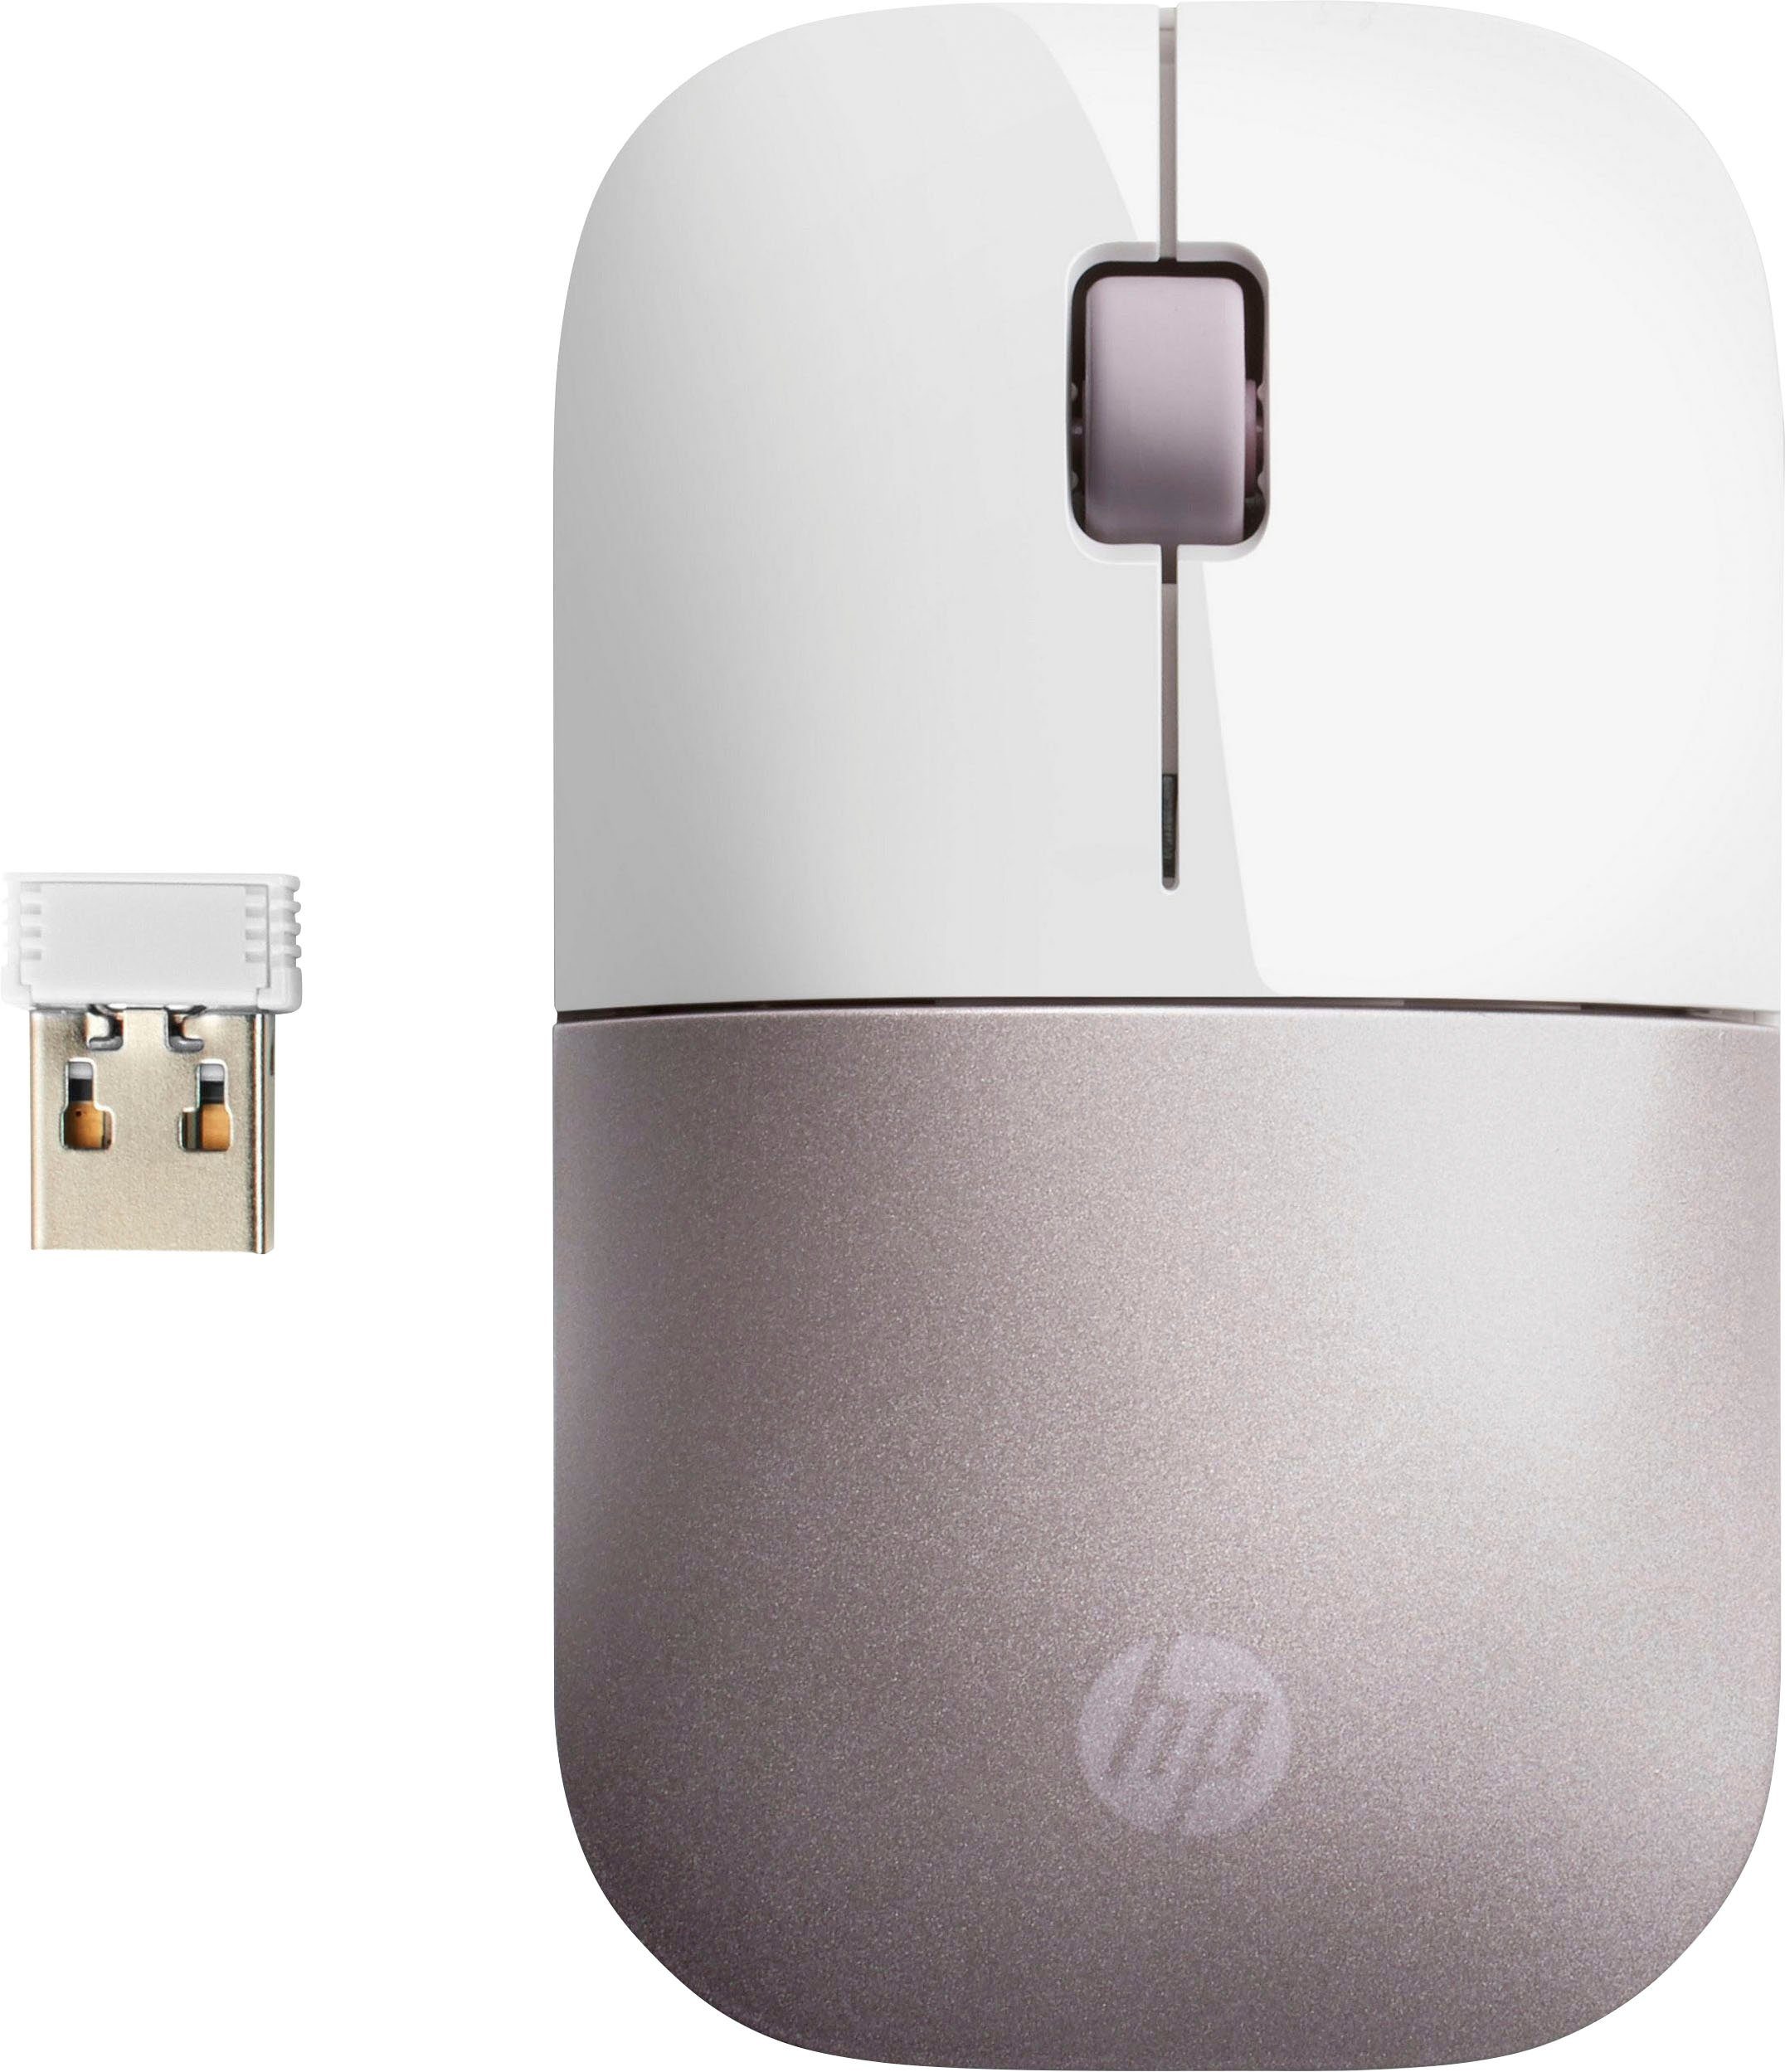 HP Maus weiß/rosa Z3700